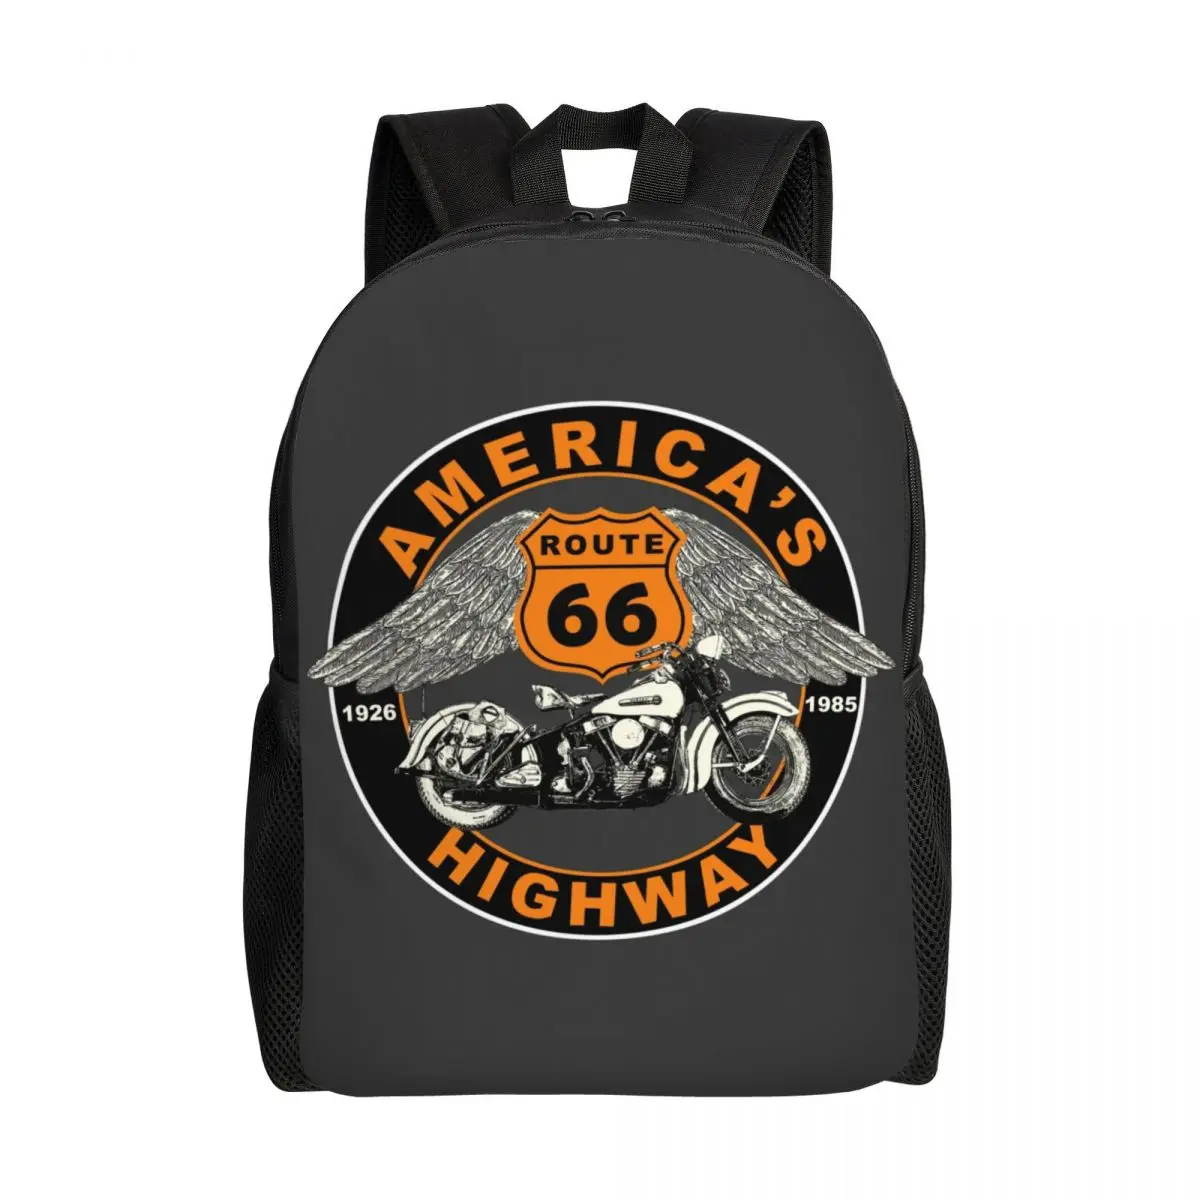 

Route 66 Americas Highway Travel Backpack Men Women School Laptop Bookbag US 66 Motorbike College Student Daypack Bags